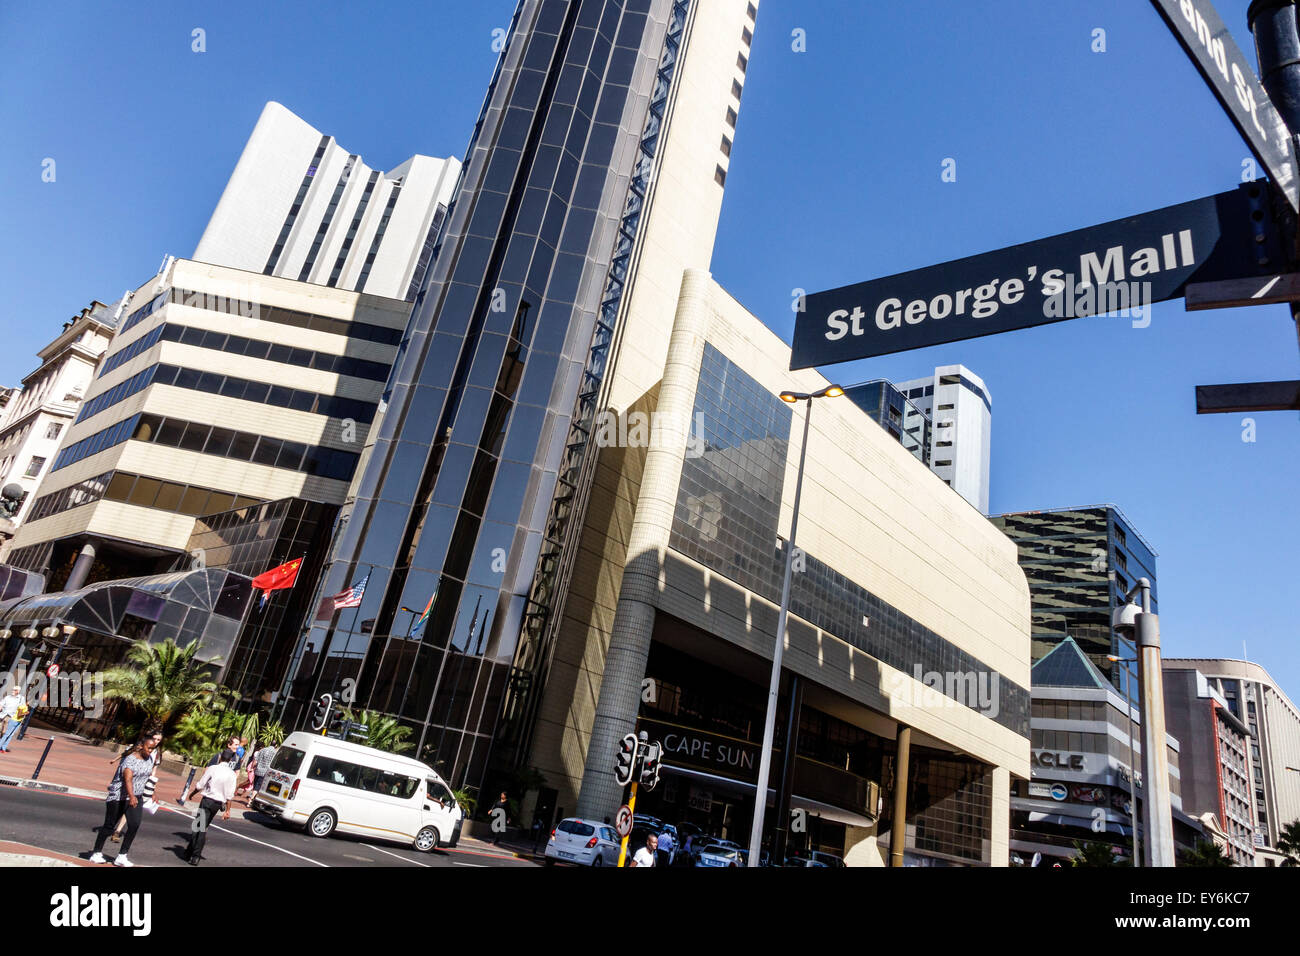 Cape Town South Africa,City Centre,center,Strand Street,St. George's Mall,city skyline,buildings,SAfri150309040 Stock Photo